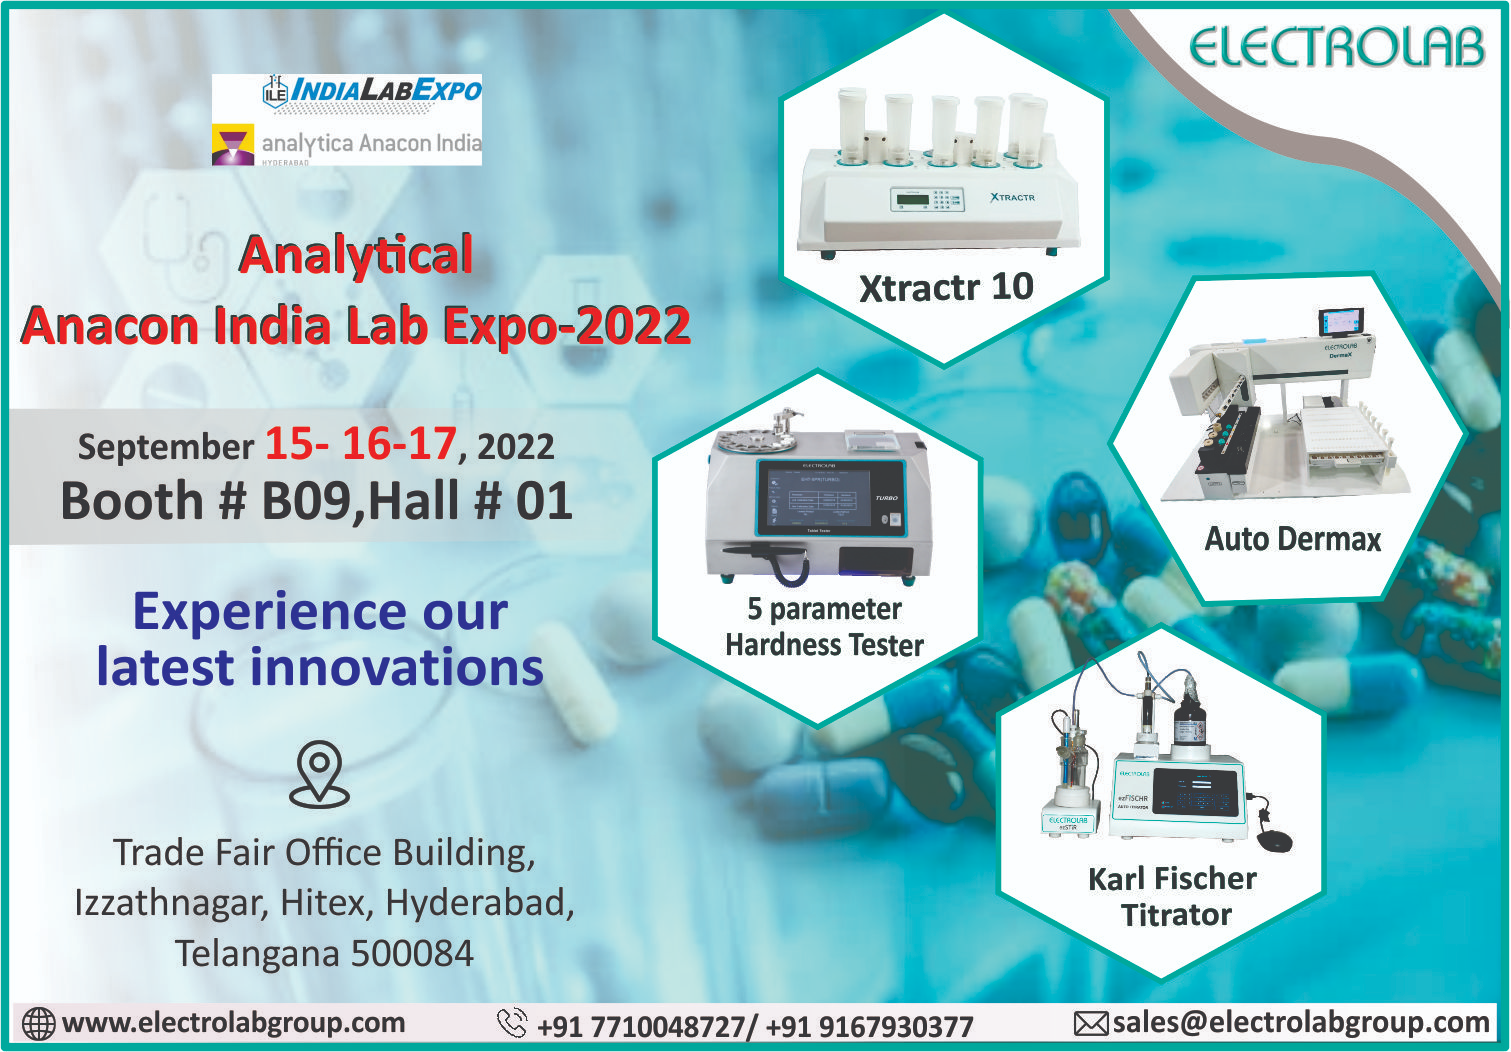 Analytical Anacon India Lab Expo,Hyderabad